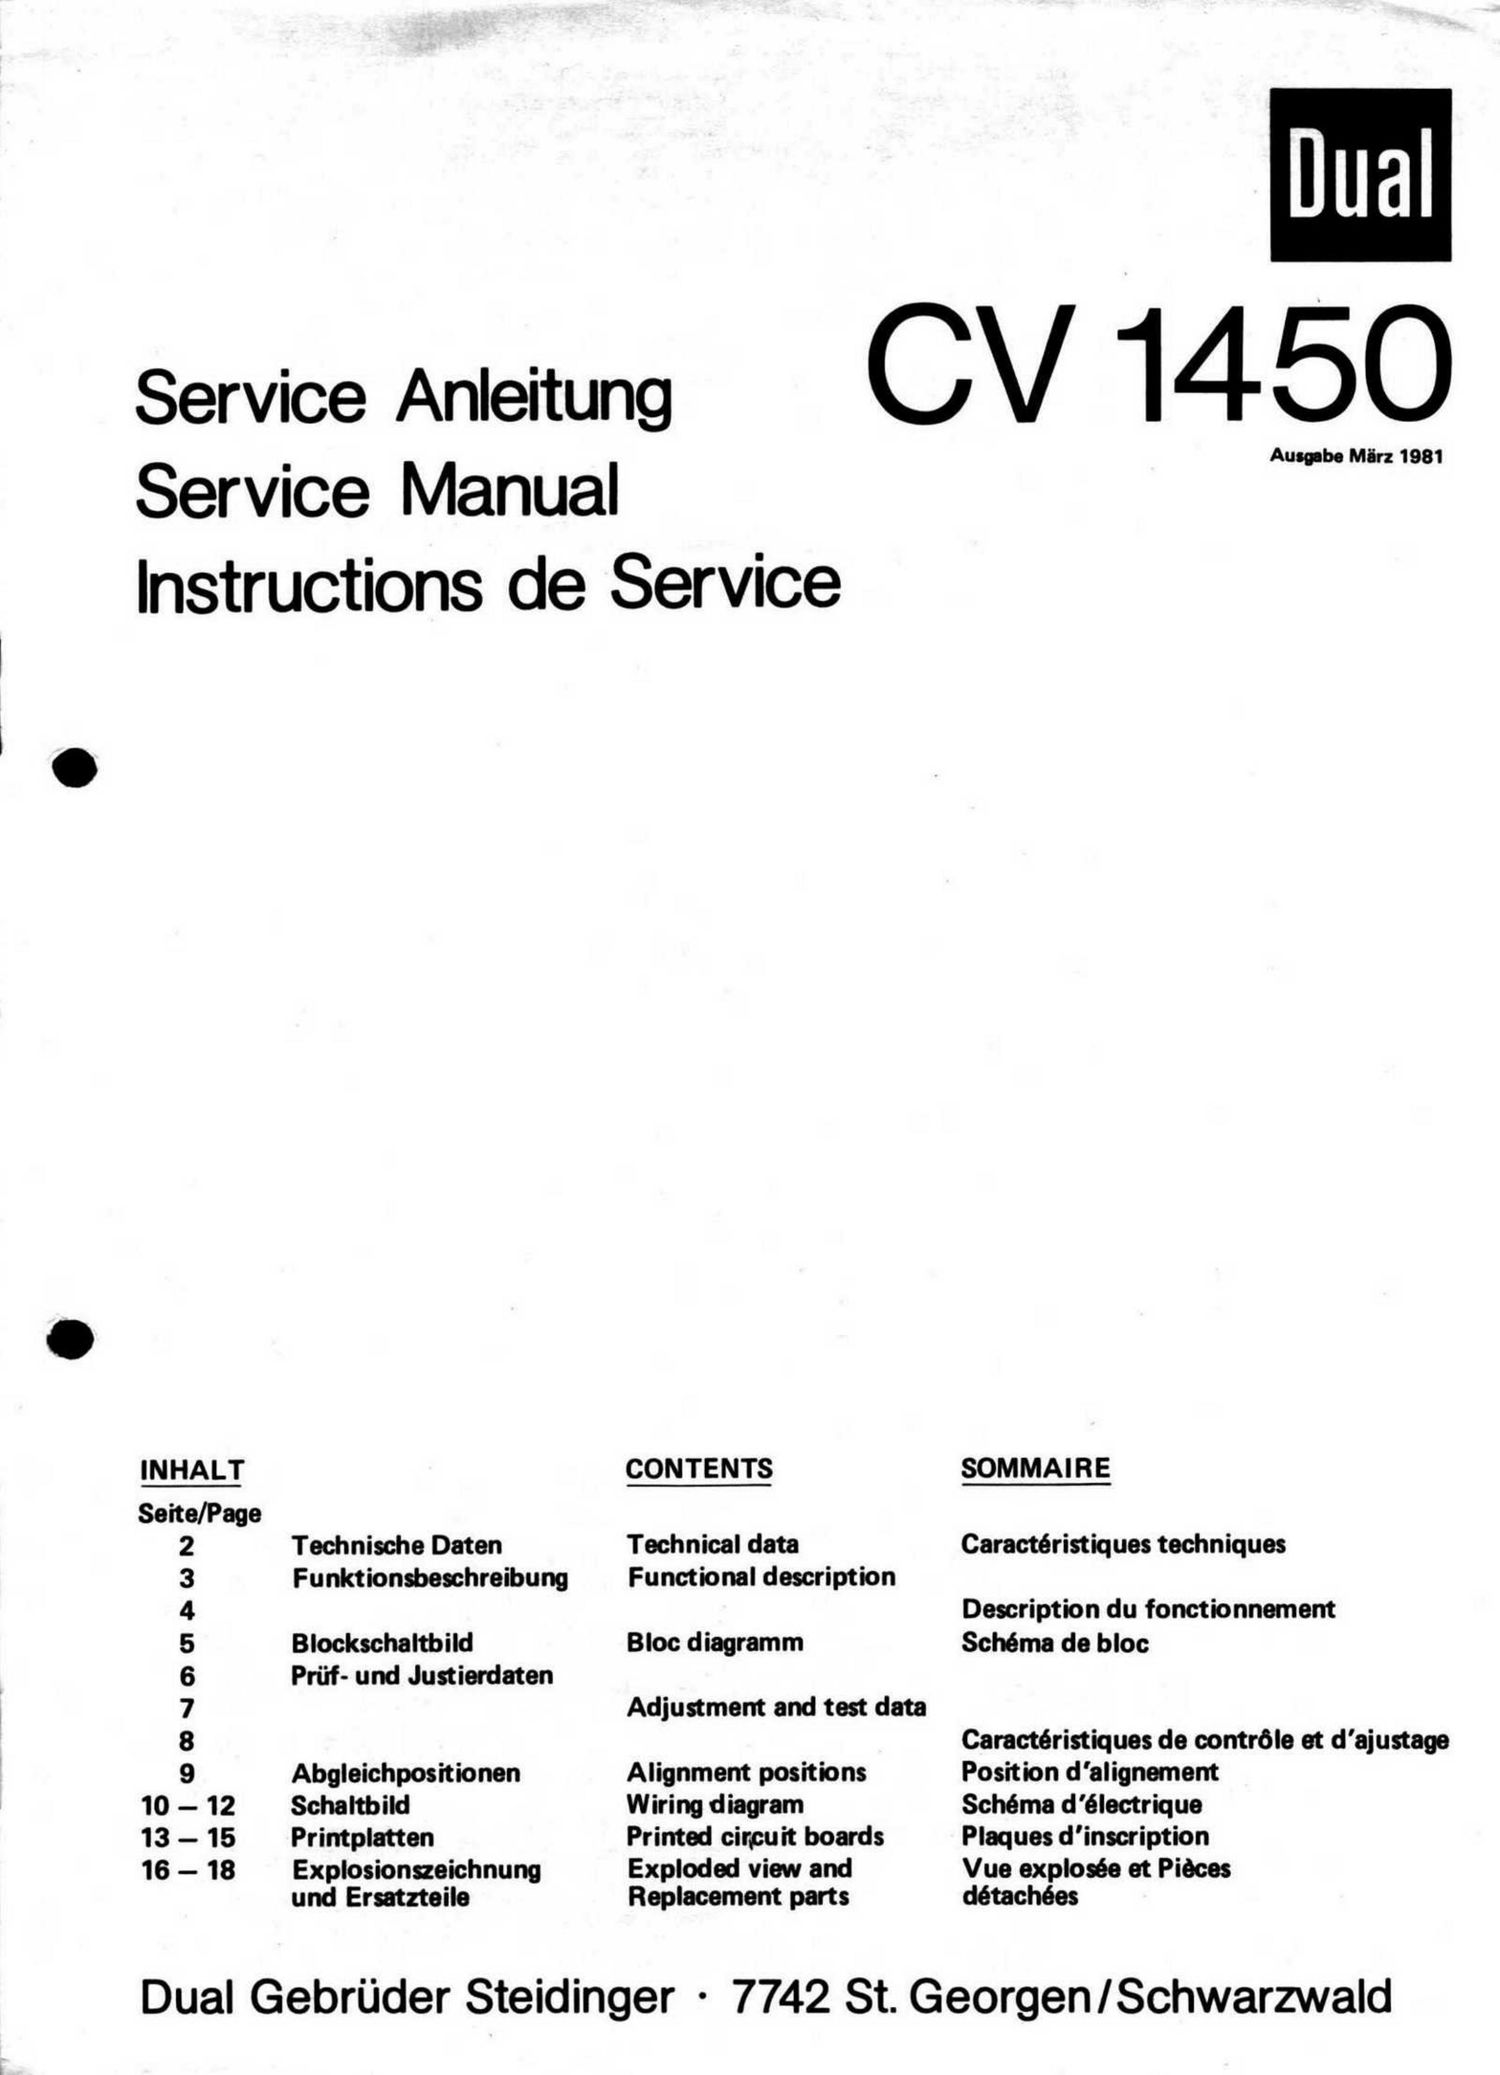 Dual CV 1450 Service Manual